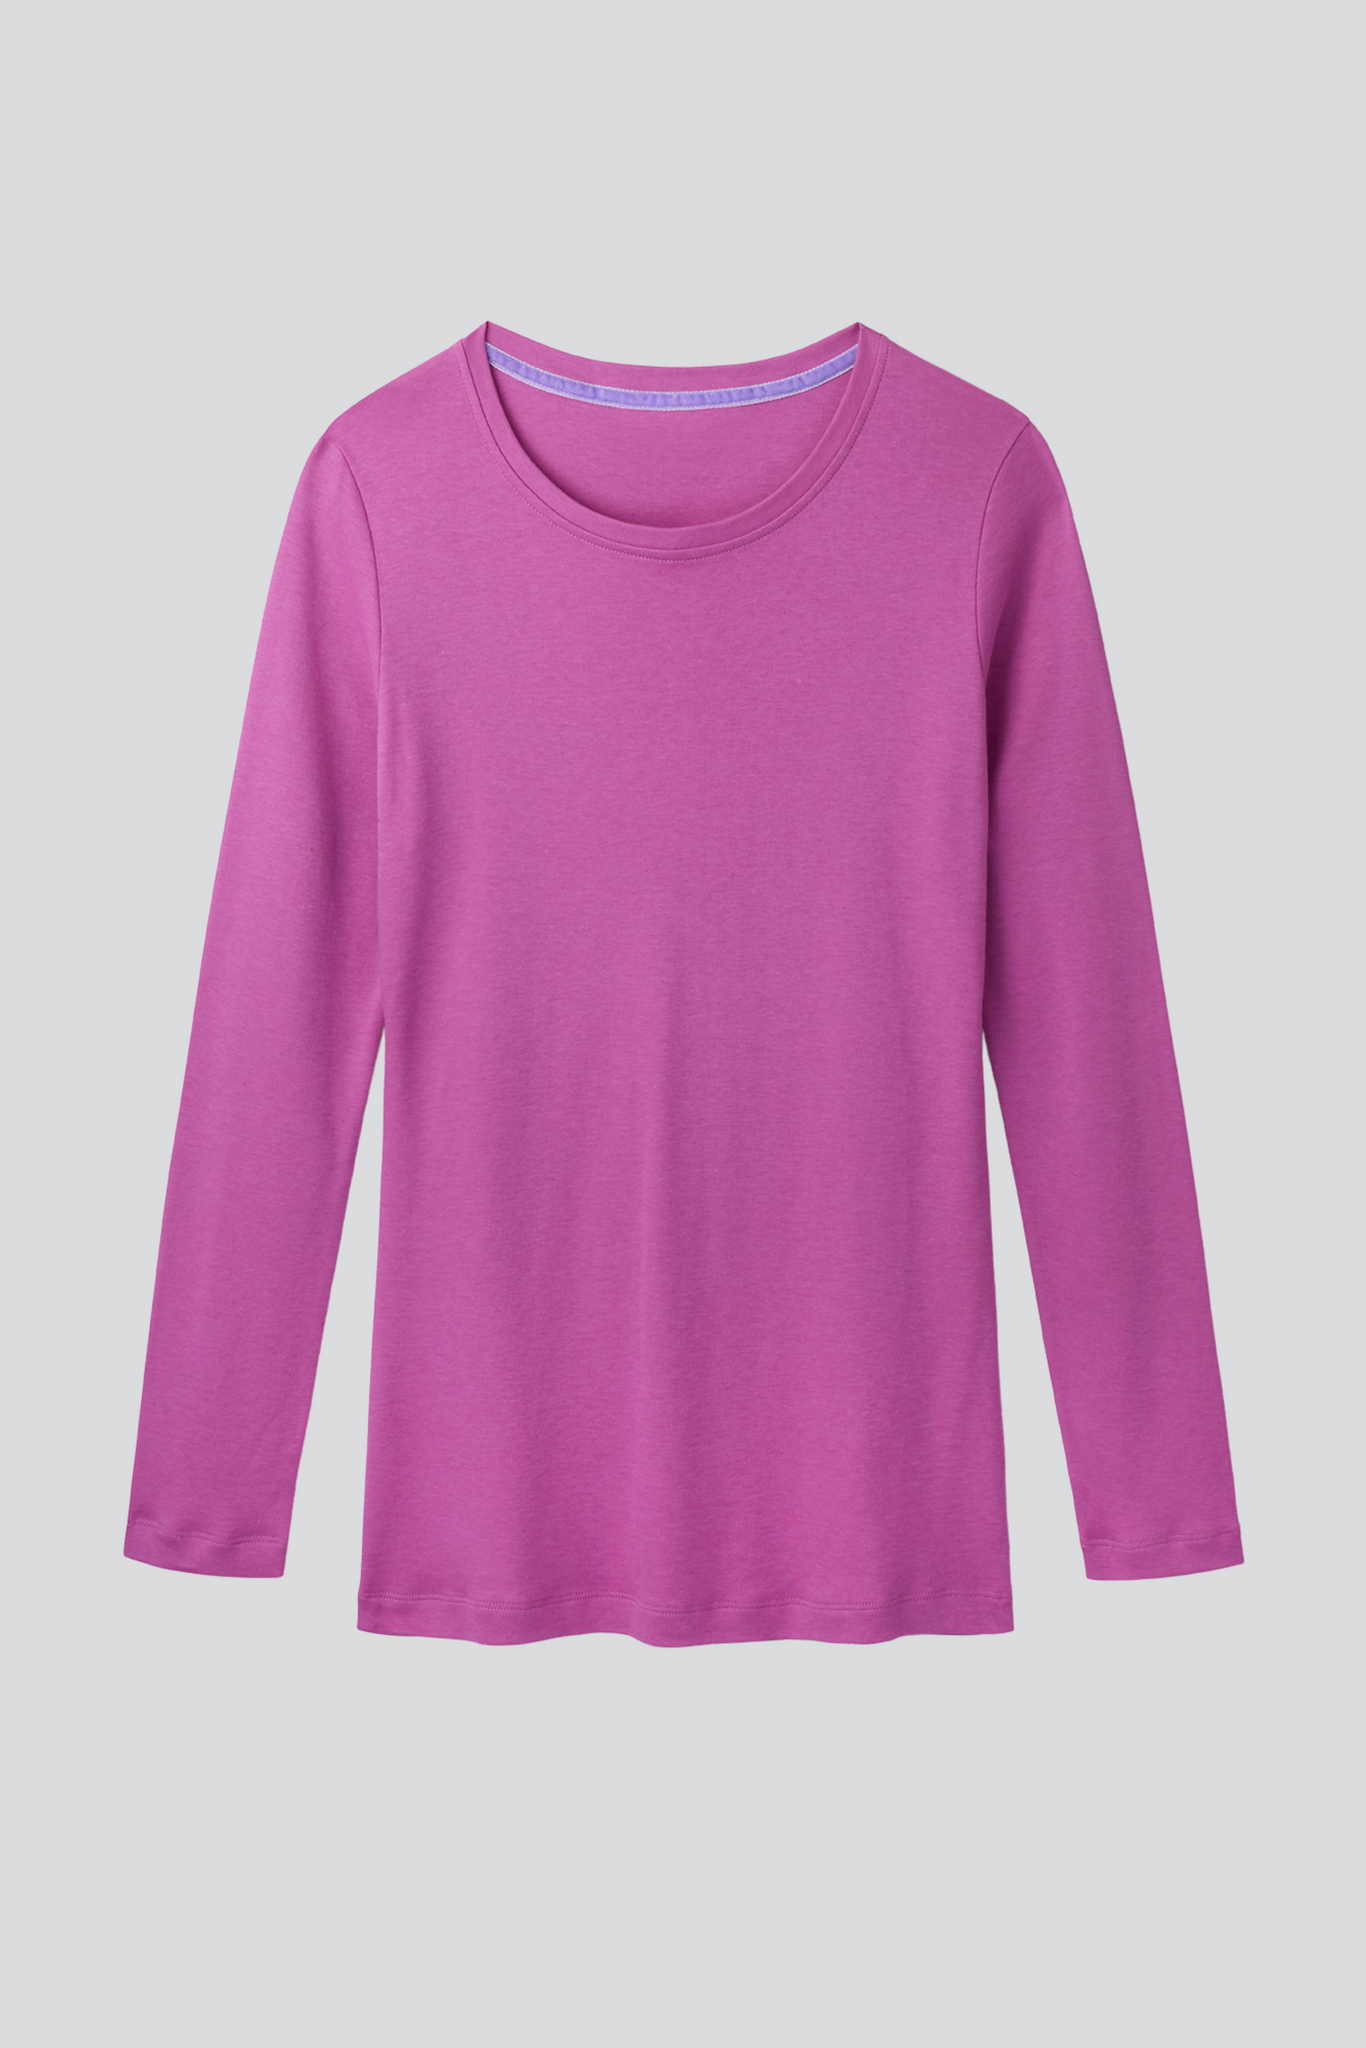 Women's Pink Long Sleeve Crew Neck Cotton Modal Blend T-shirt by Lavender Hill